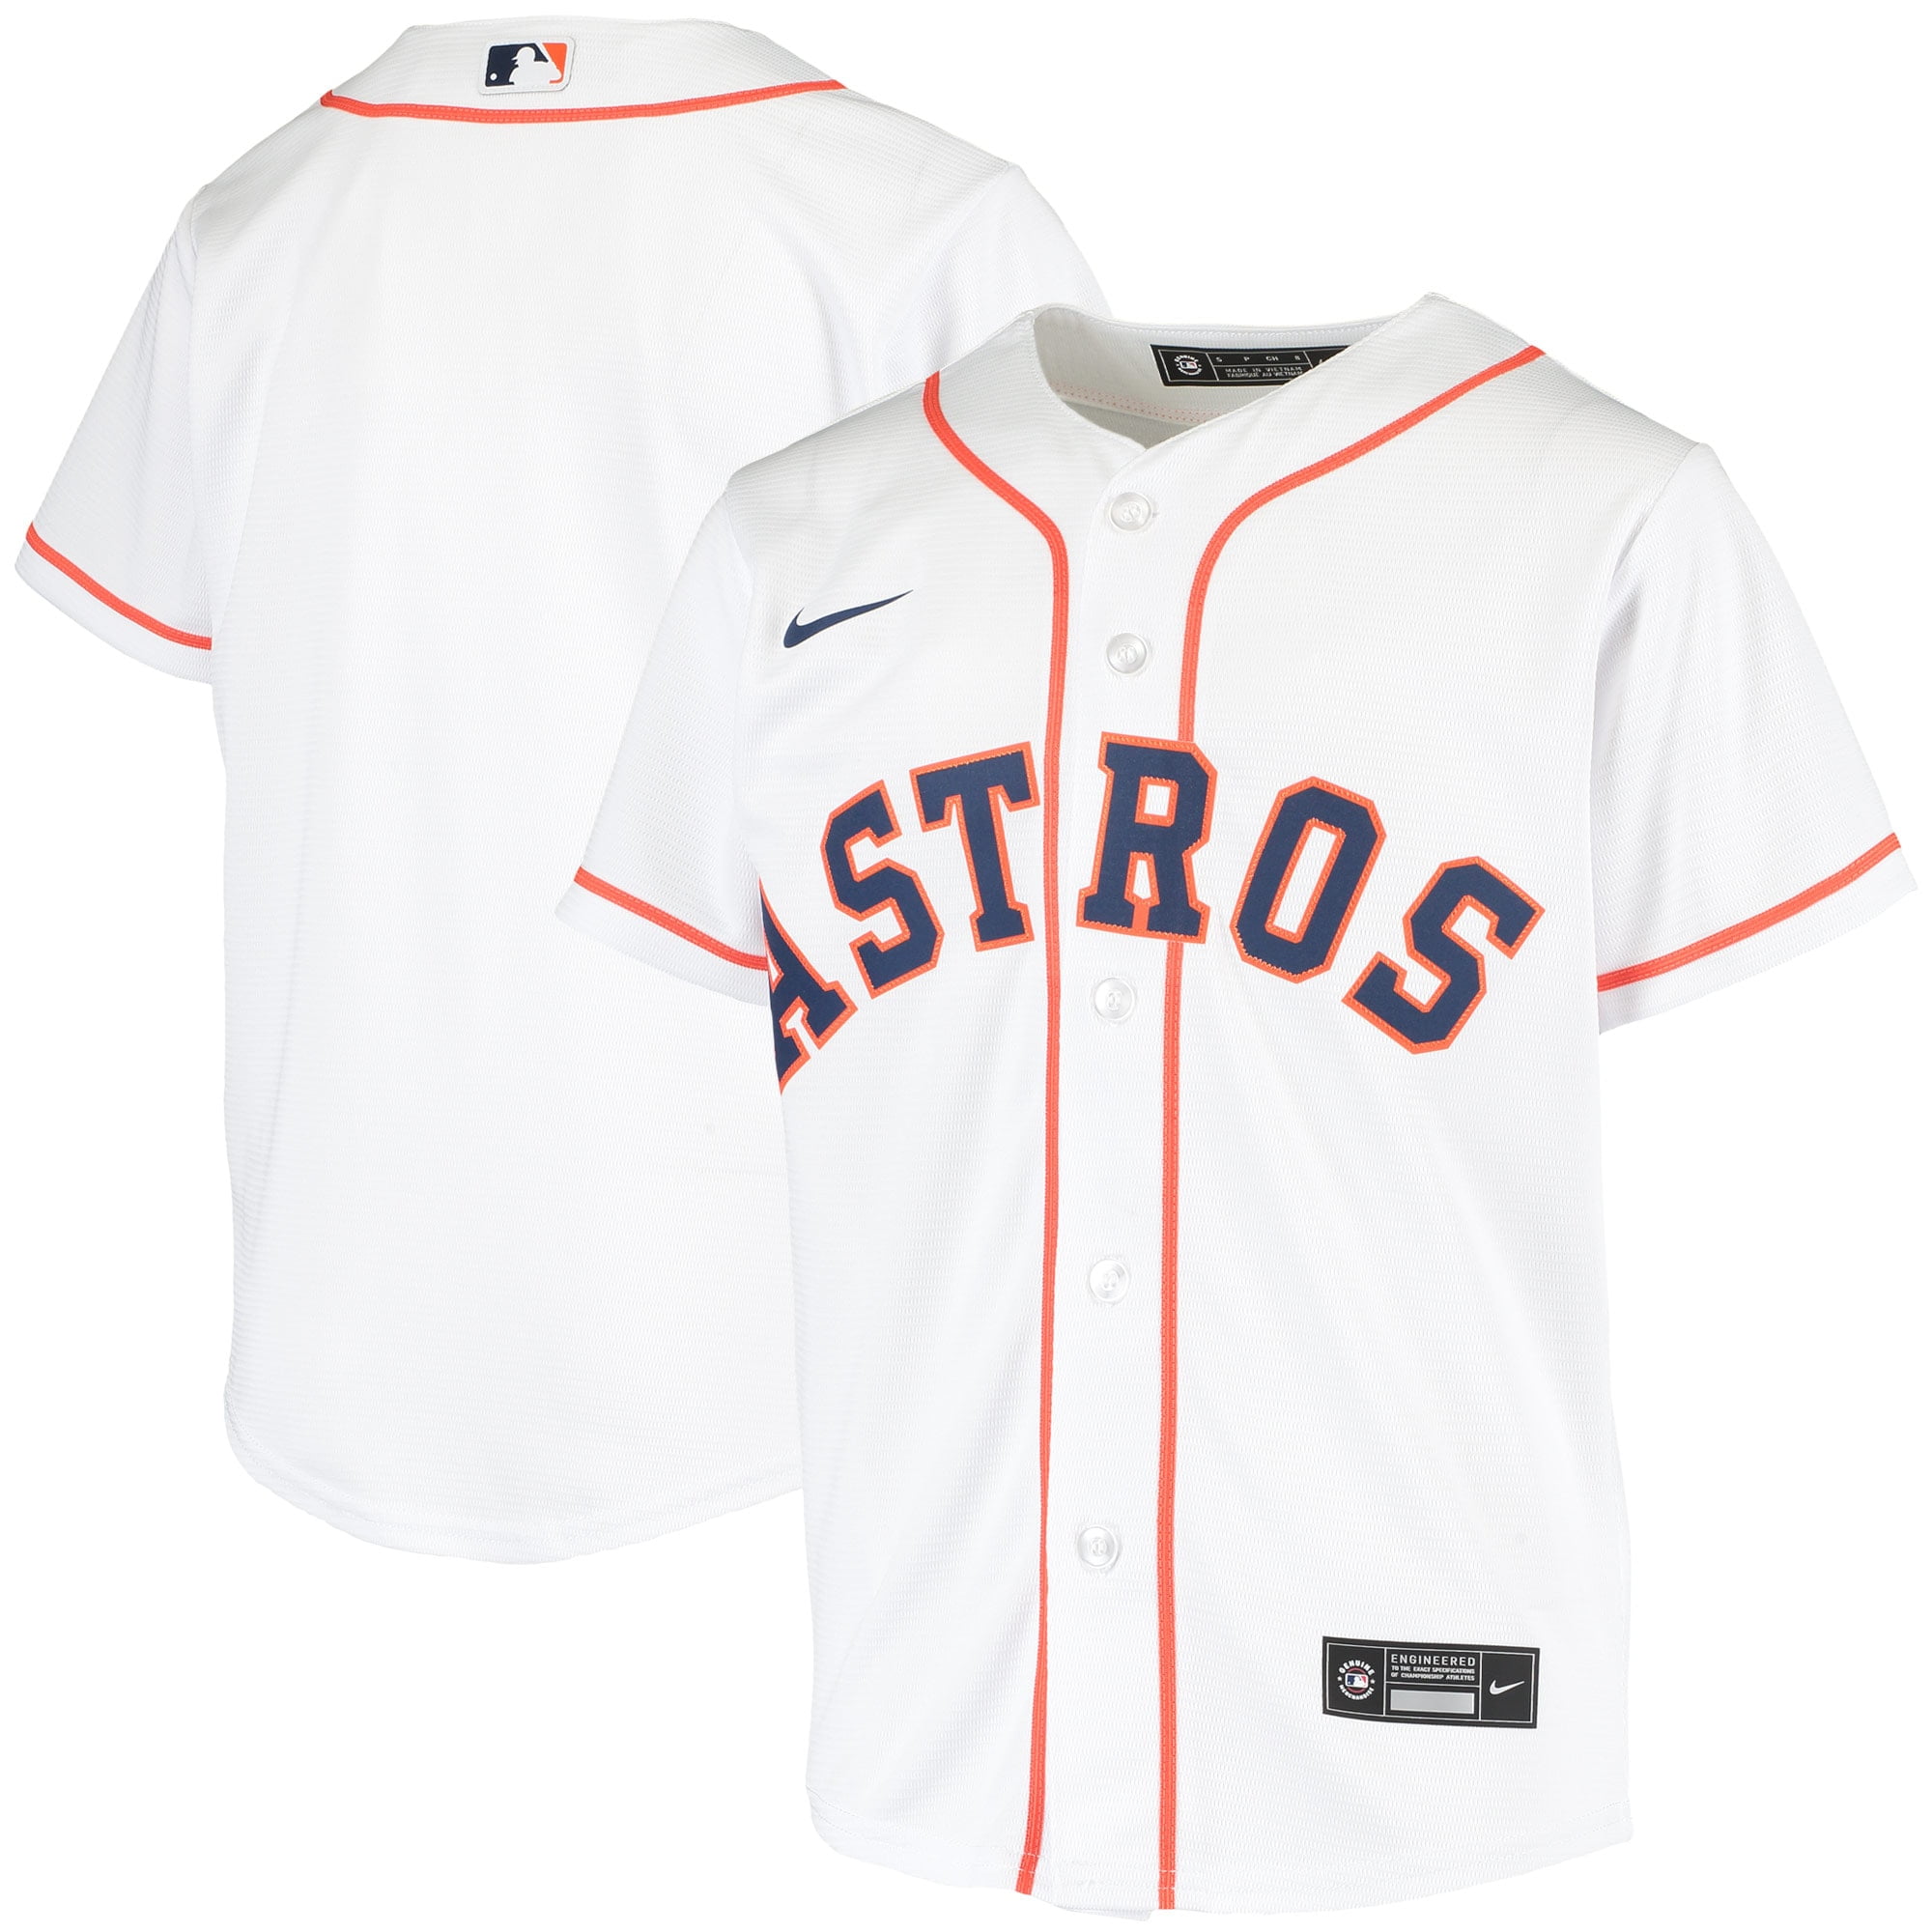 astros replica jersey